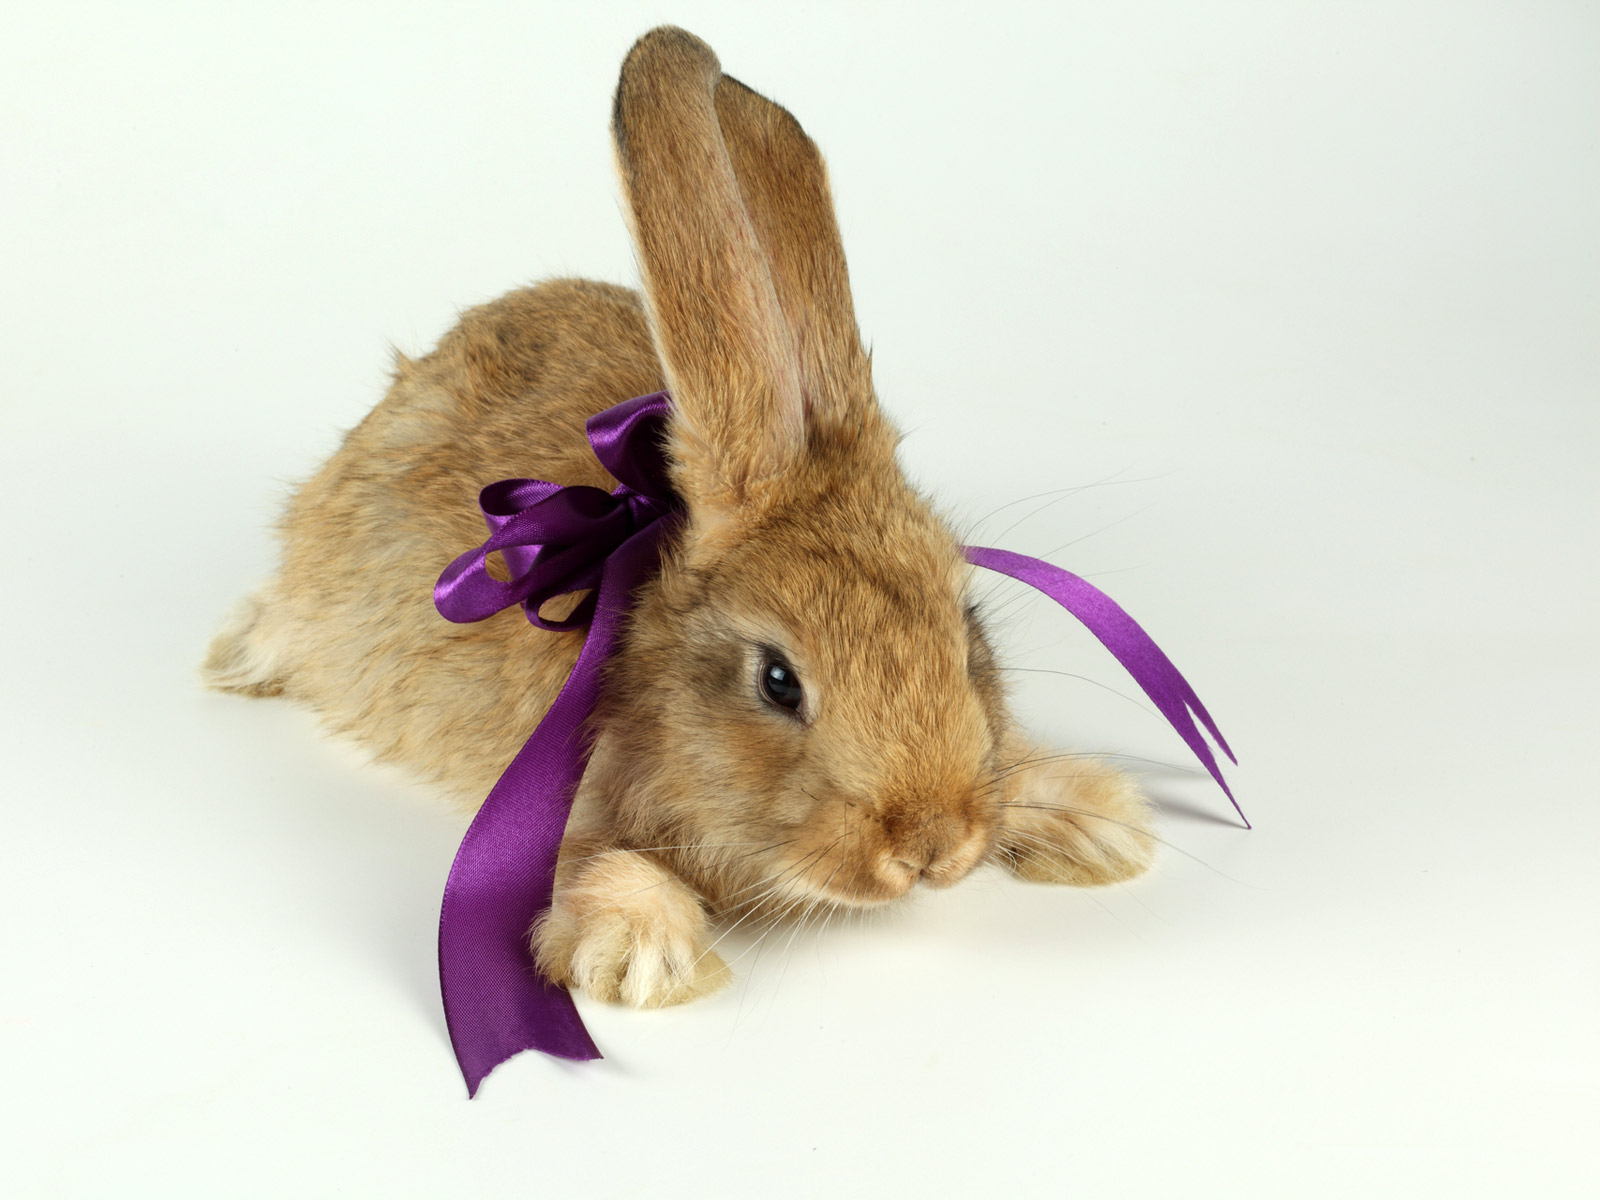 Bunny with a bow